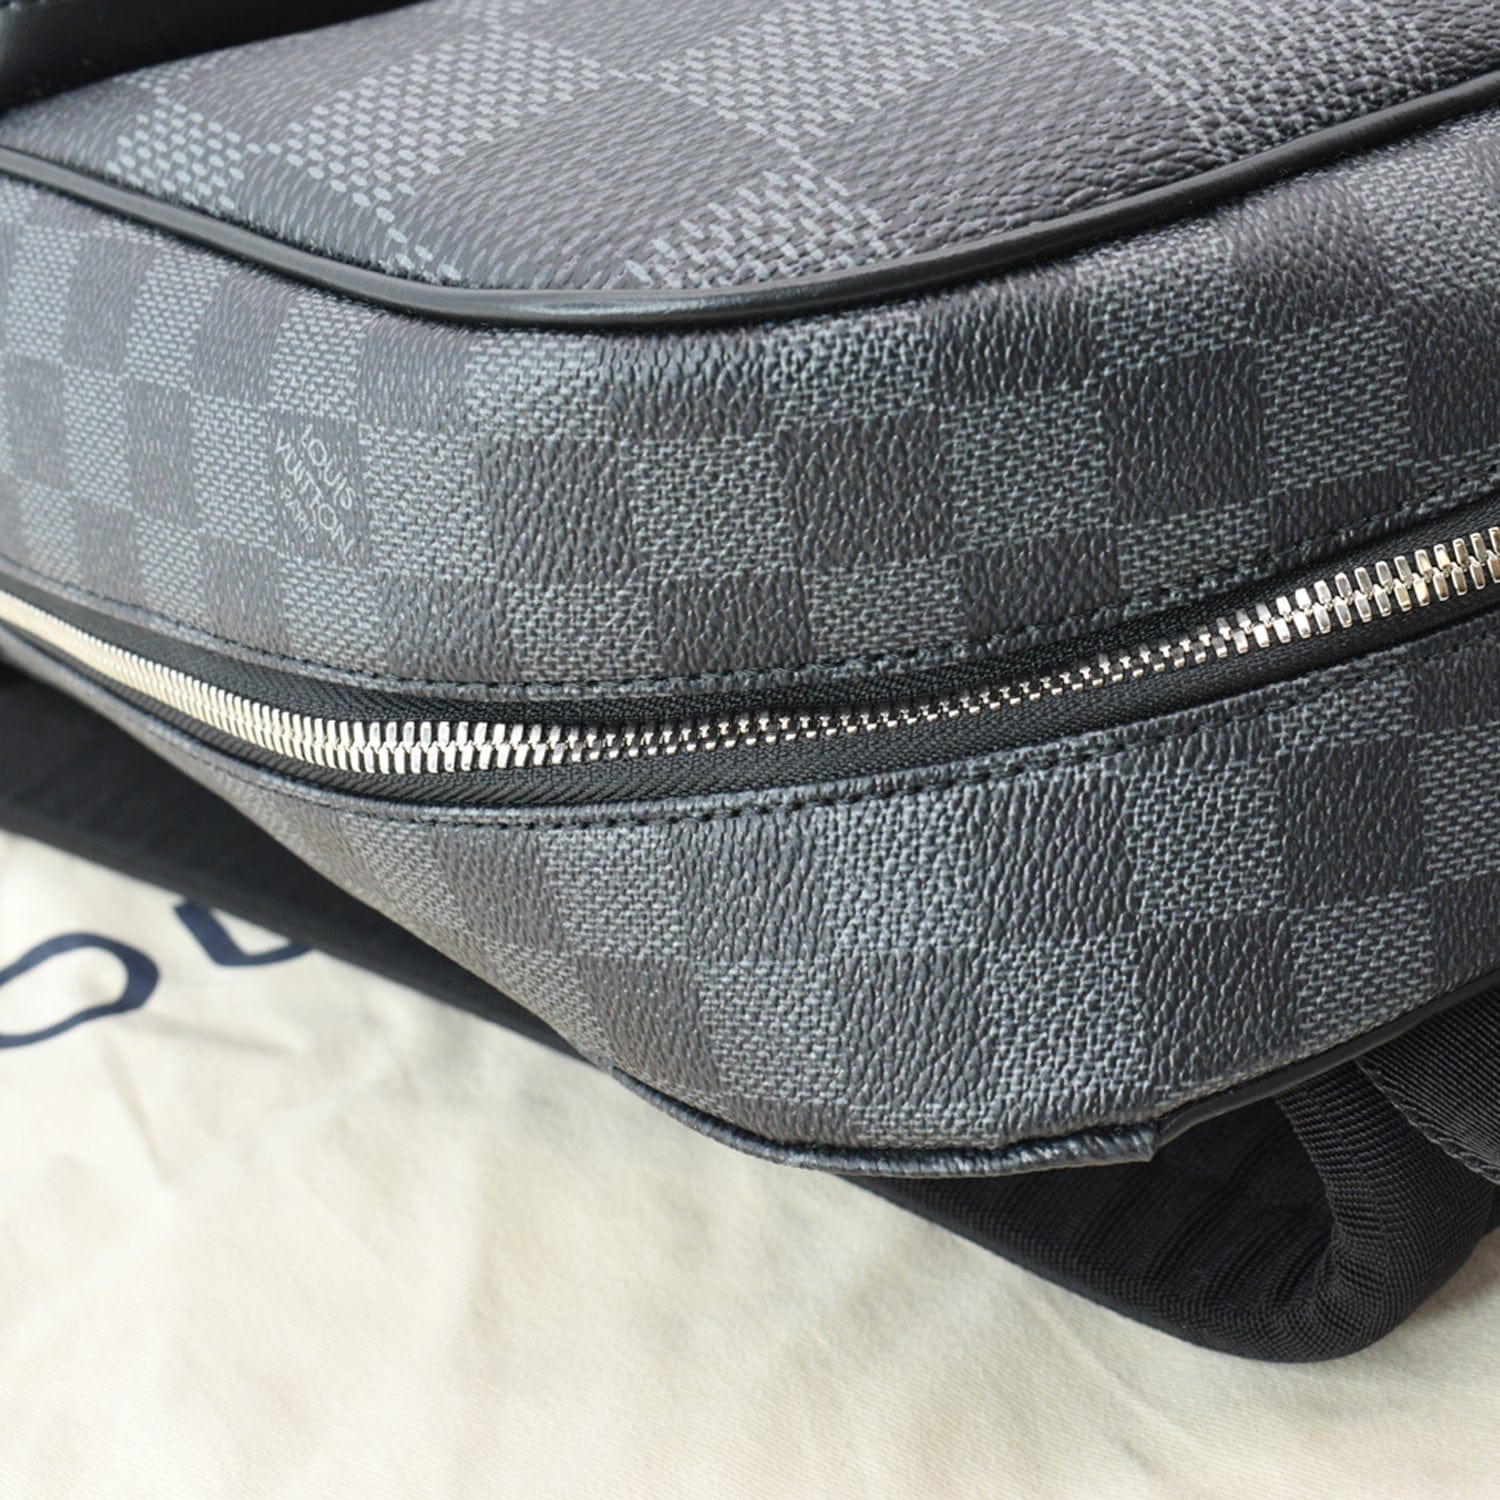 Louis Vuitton Campus Damier Graphite Canvas Backpack Bag Gray